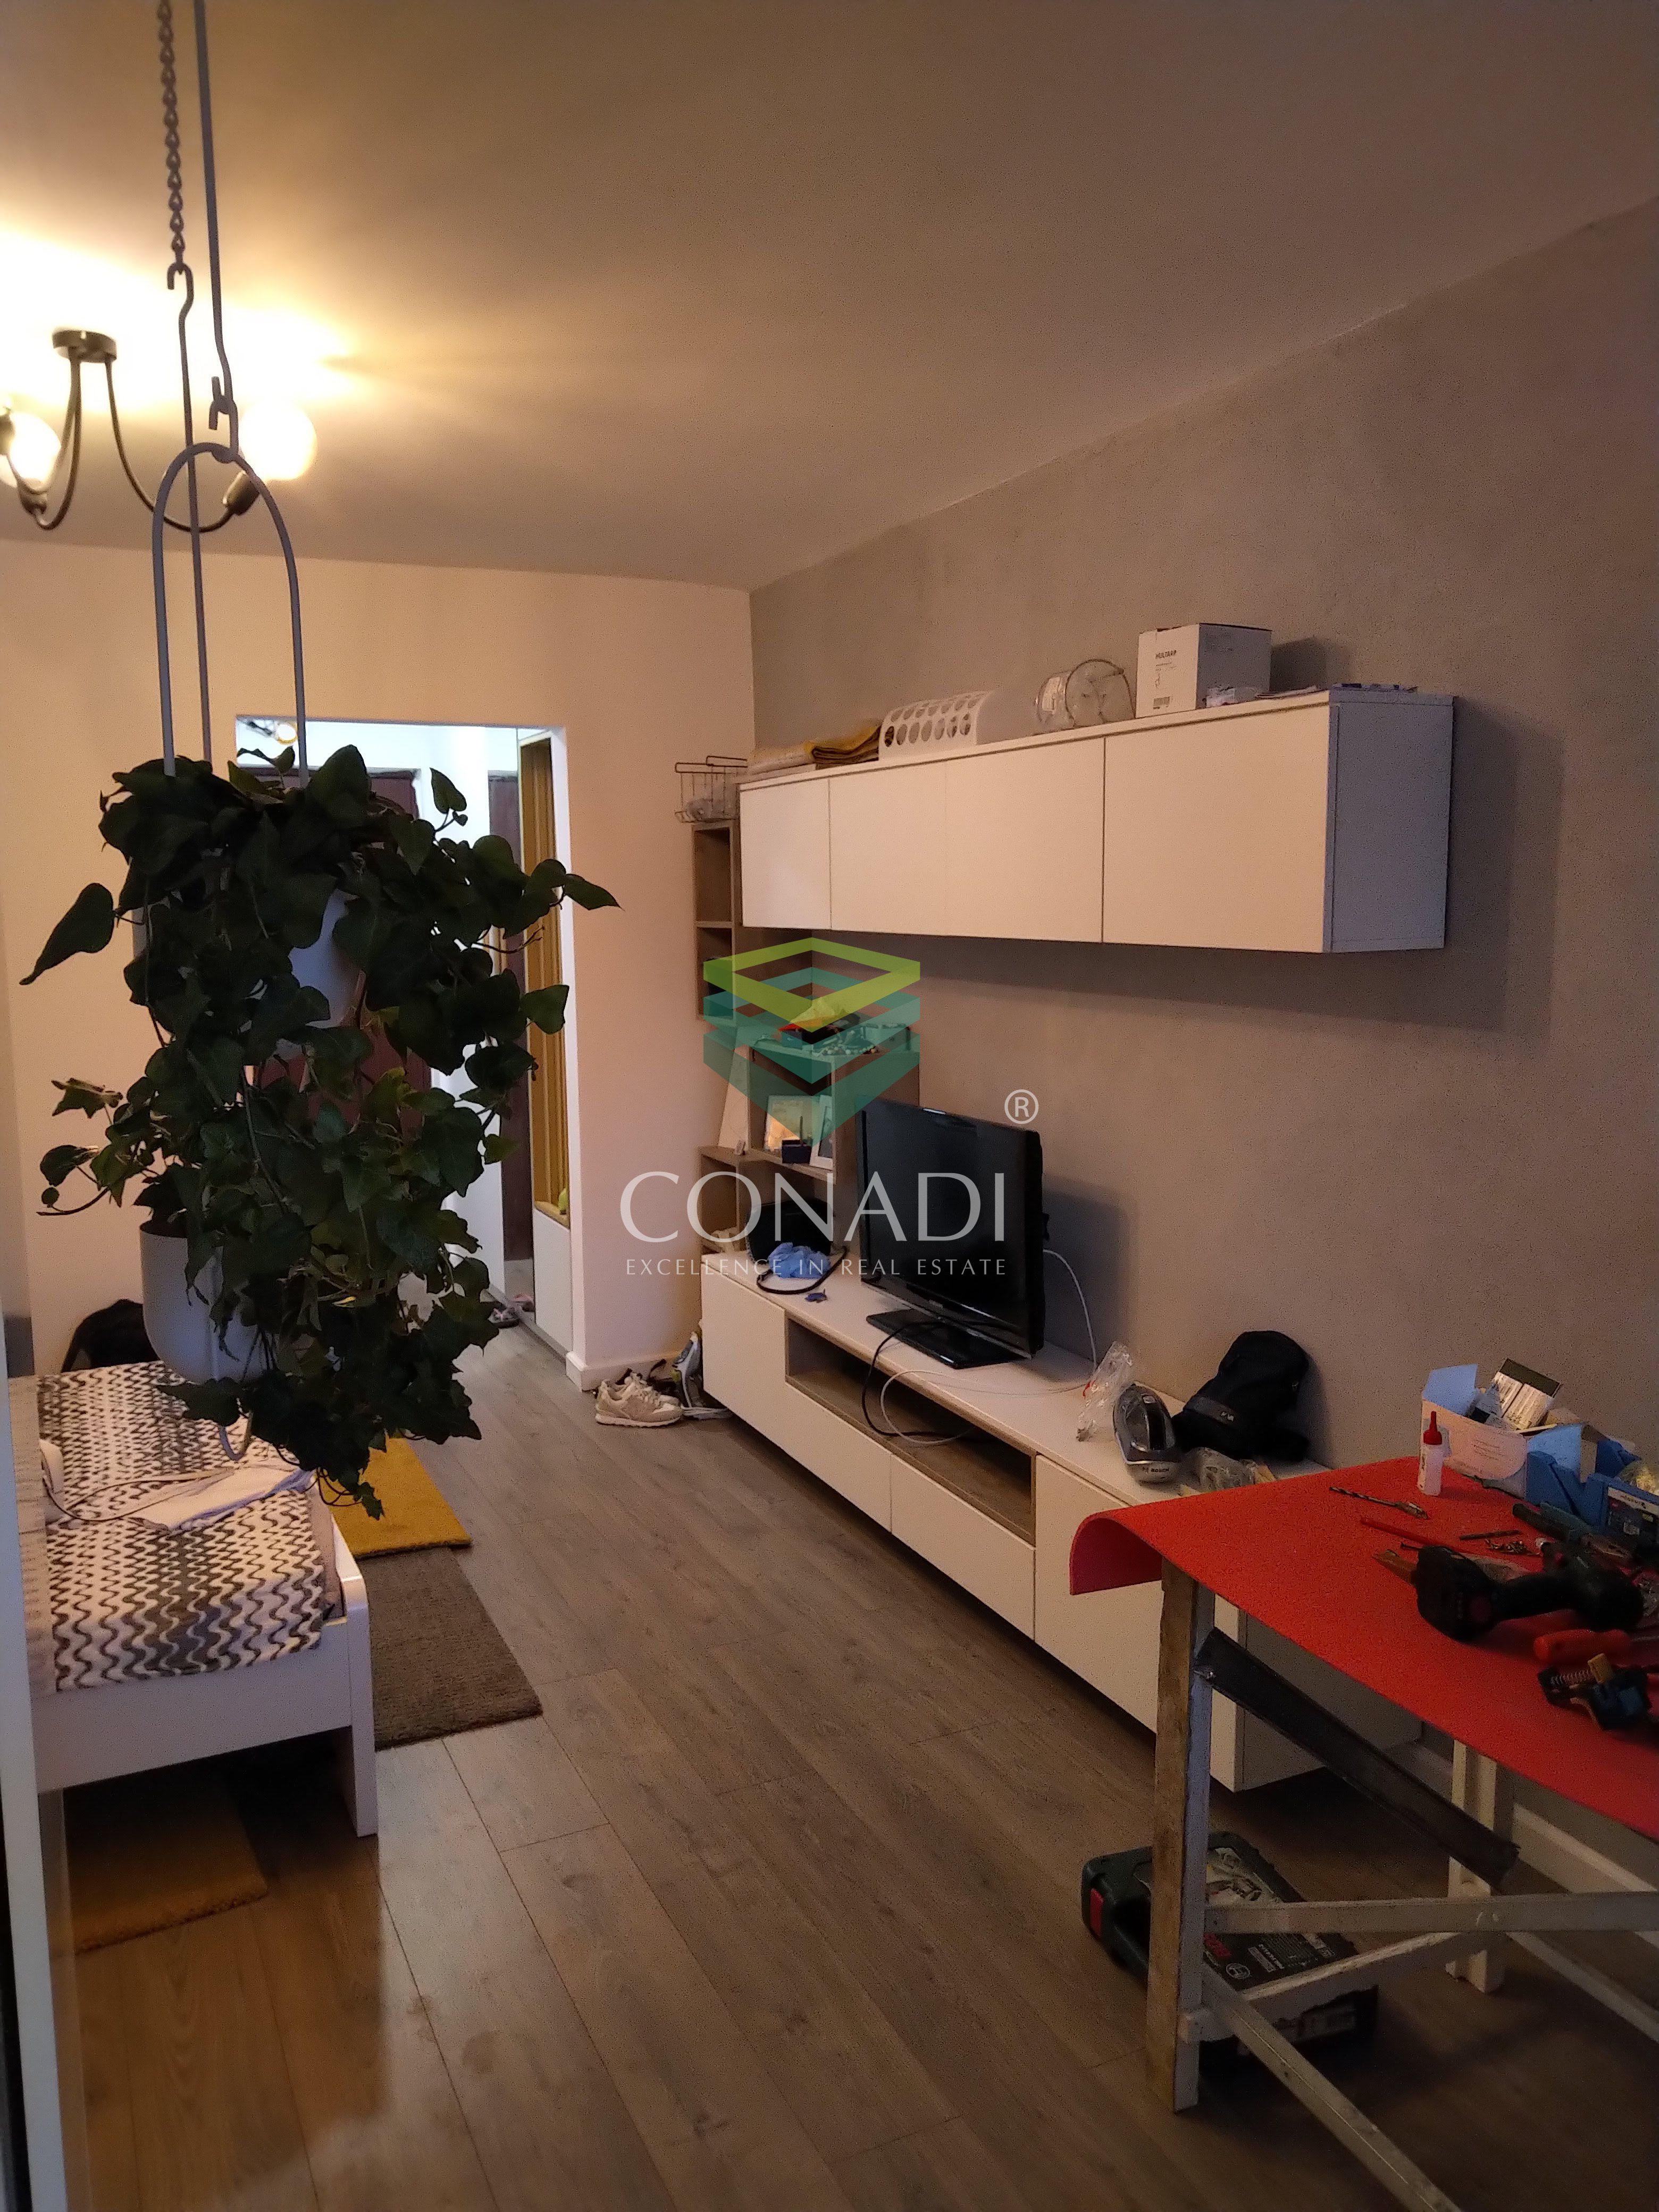 We are renting an ultramodern renovated studio on Nada Florilor street - Teiul Domnei